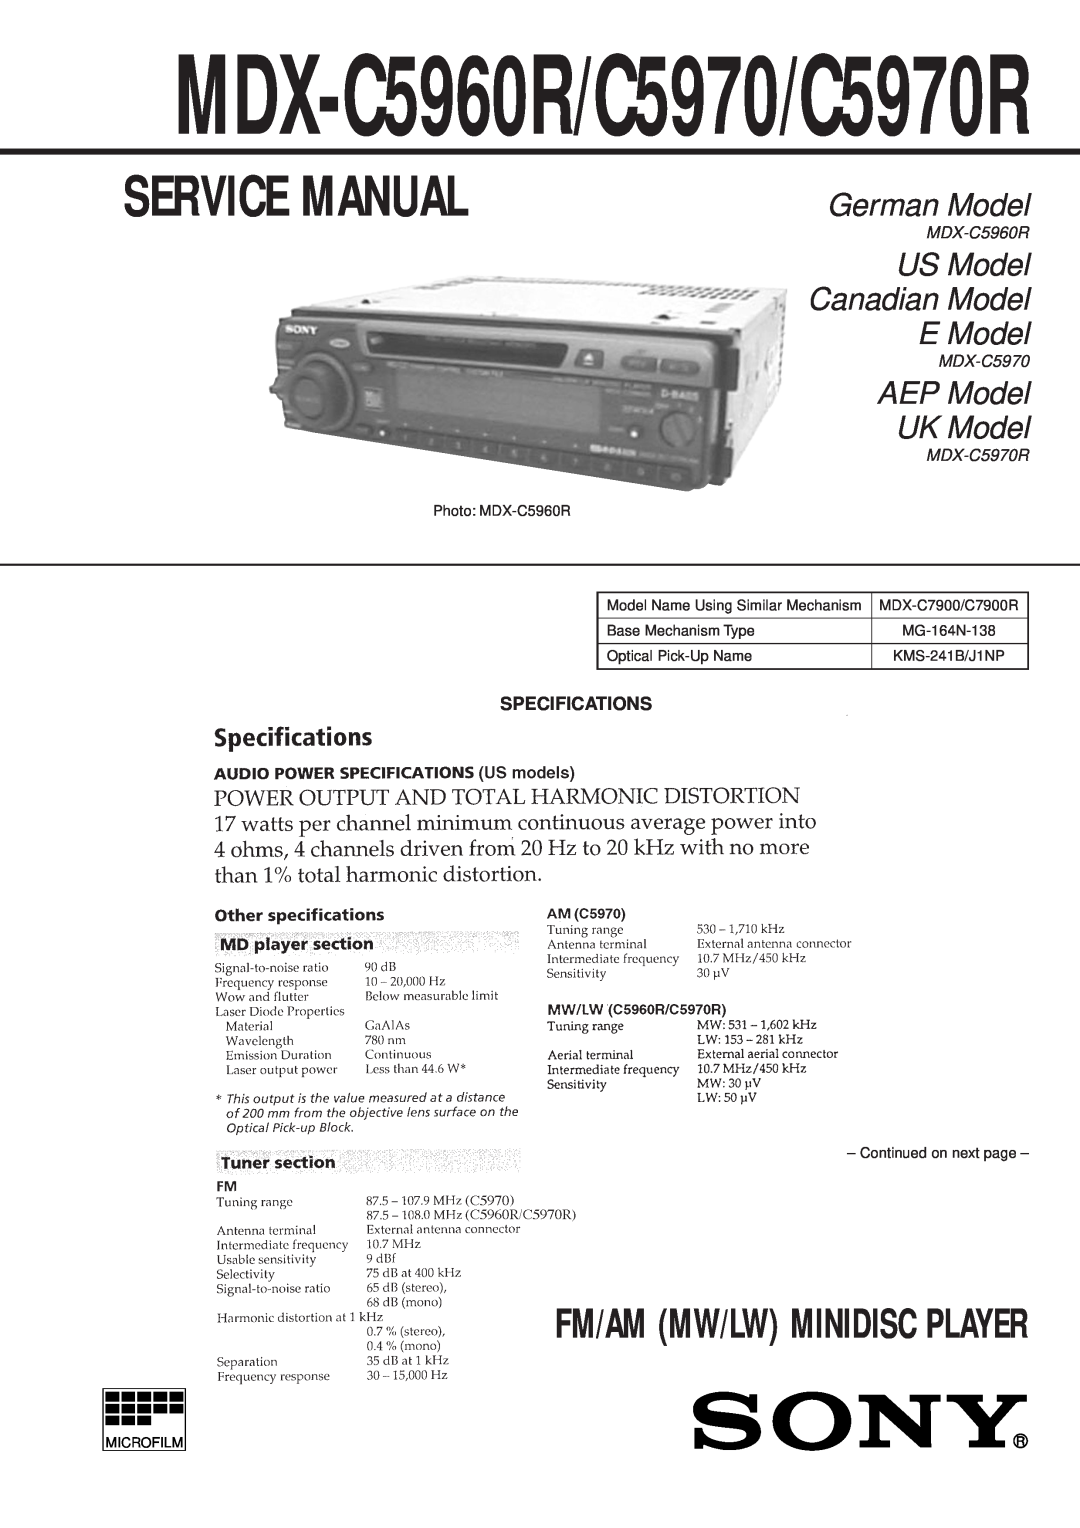 Sony MDX-C5970 service manual Specifications, MDX-C5960R/C5970/C5970R, Service Manual, German Model, AEP Model UK Model 